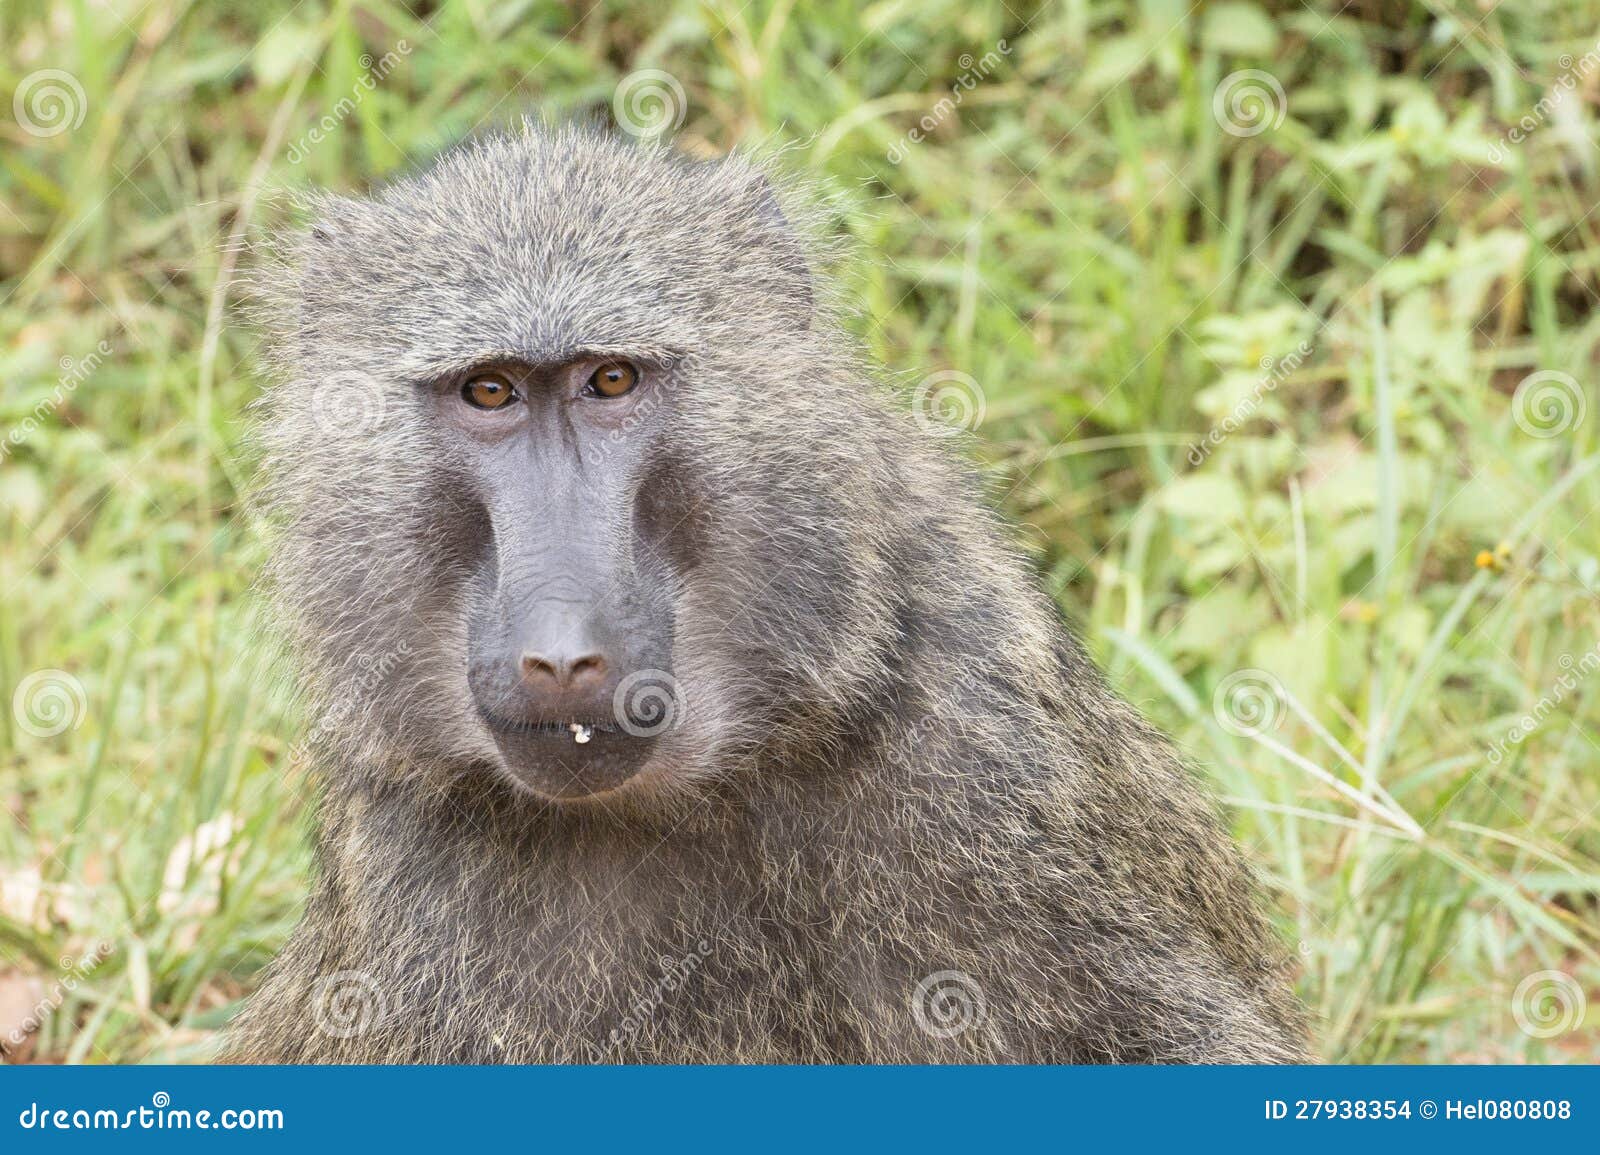 baboon, closeup of adult baboon in kibale nationalpark, uganda, africa